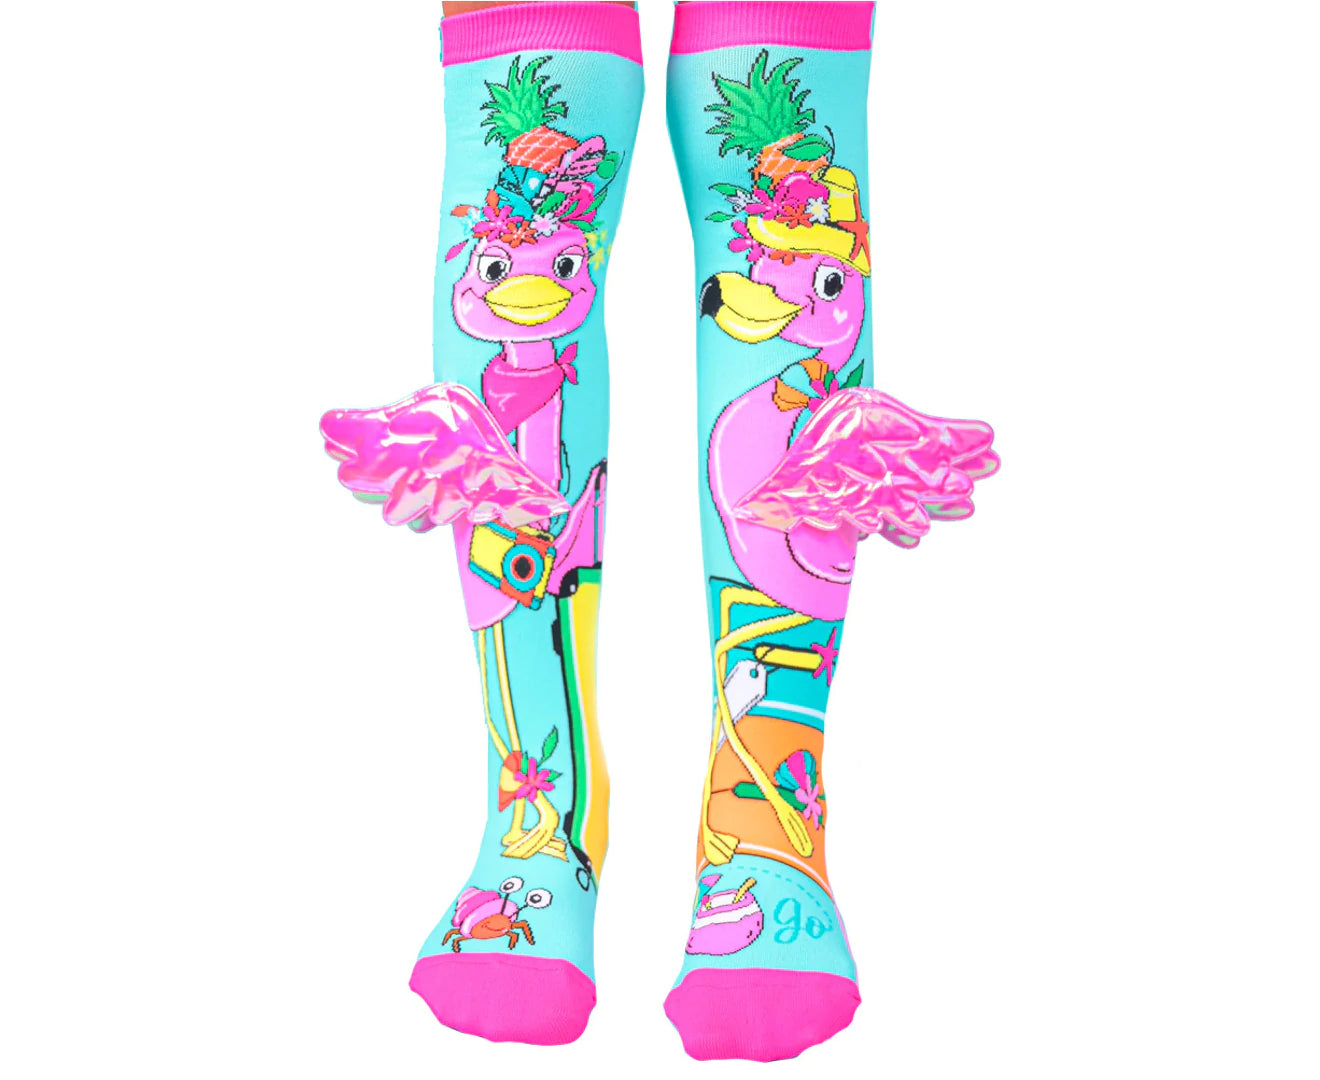 Flamingo Holiday Vibes Long Knee High Socks Pair Unisex - Holiday Vibes